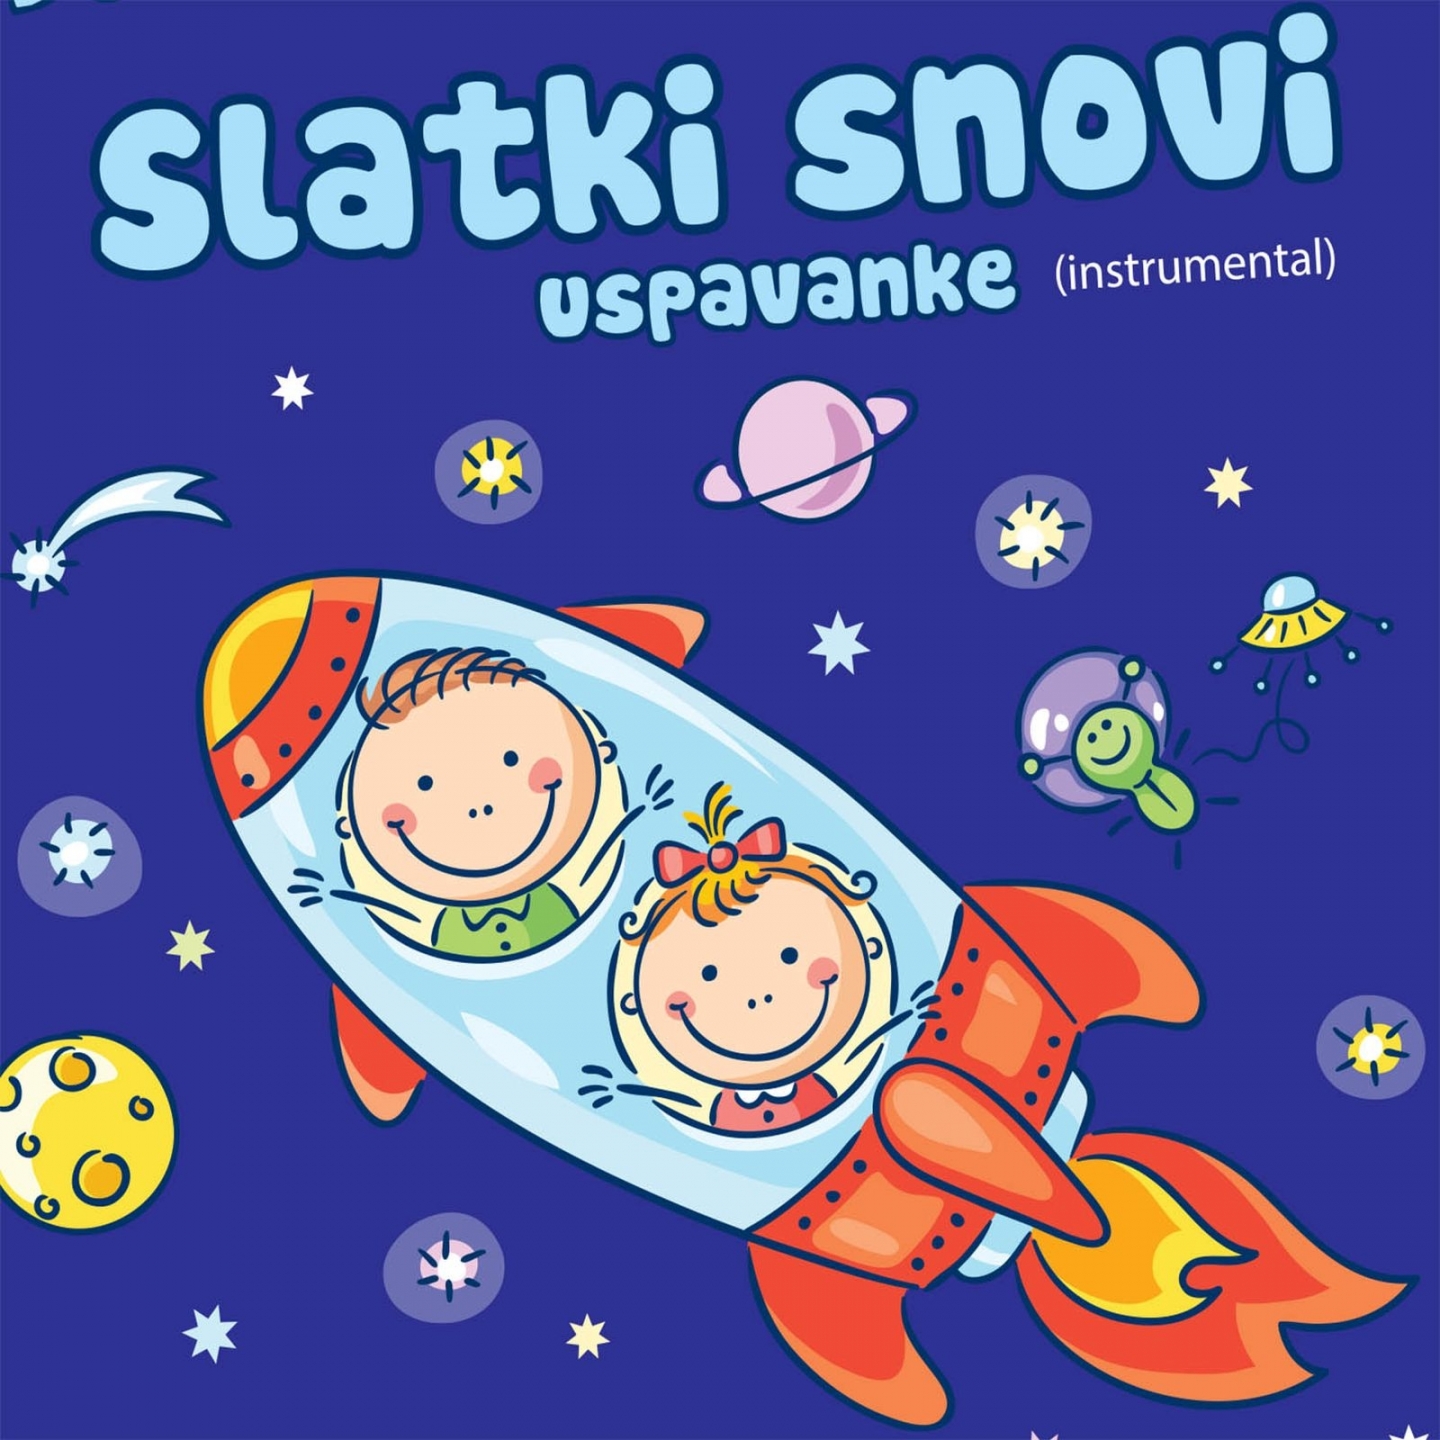 Do-Re-Mi Slatki Snovi - Uspavanke (Instrumental)